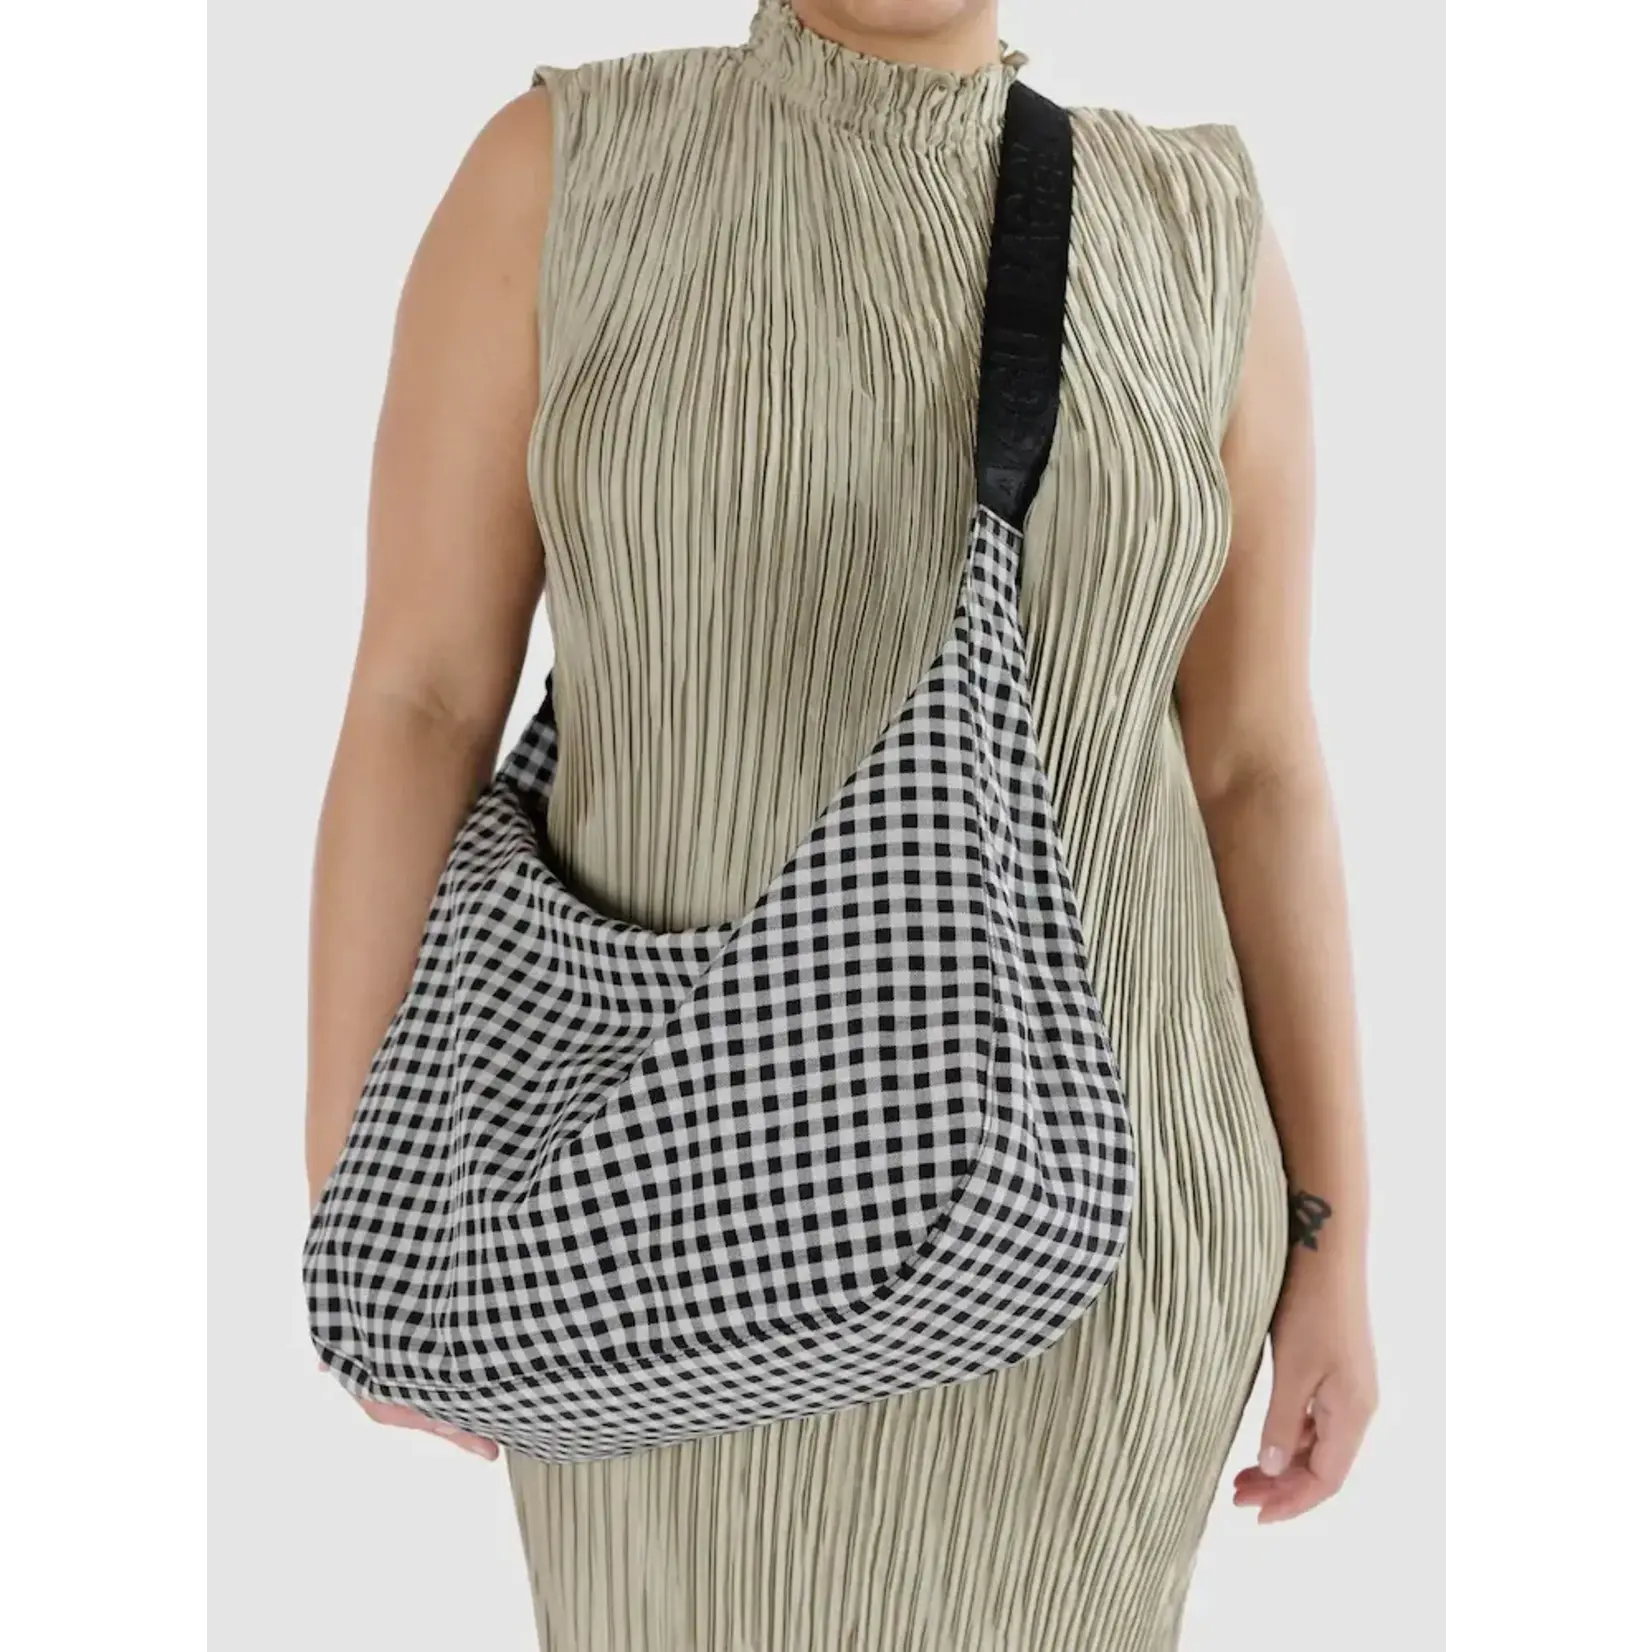 Baggu Medium Nylon Crescent Bag - Black & White Gingham